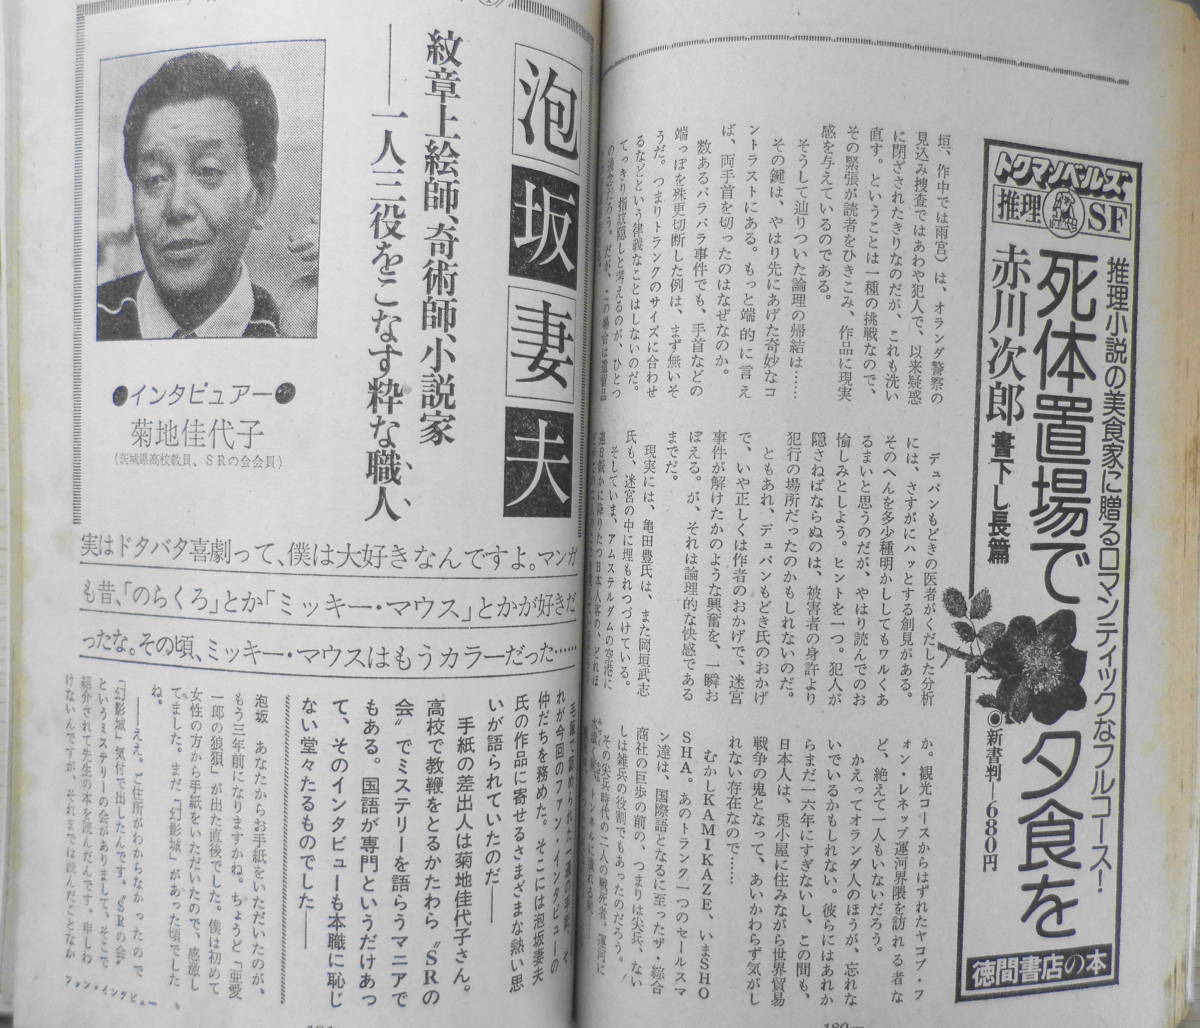  Lupin mystery integrated magazine Showa era 56 year No.3 summer number virtue interval bookstore polka dot pattern . month. light ./ Kataoka Yoshio g